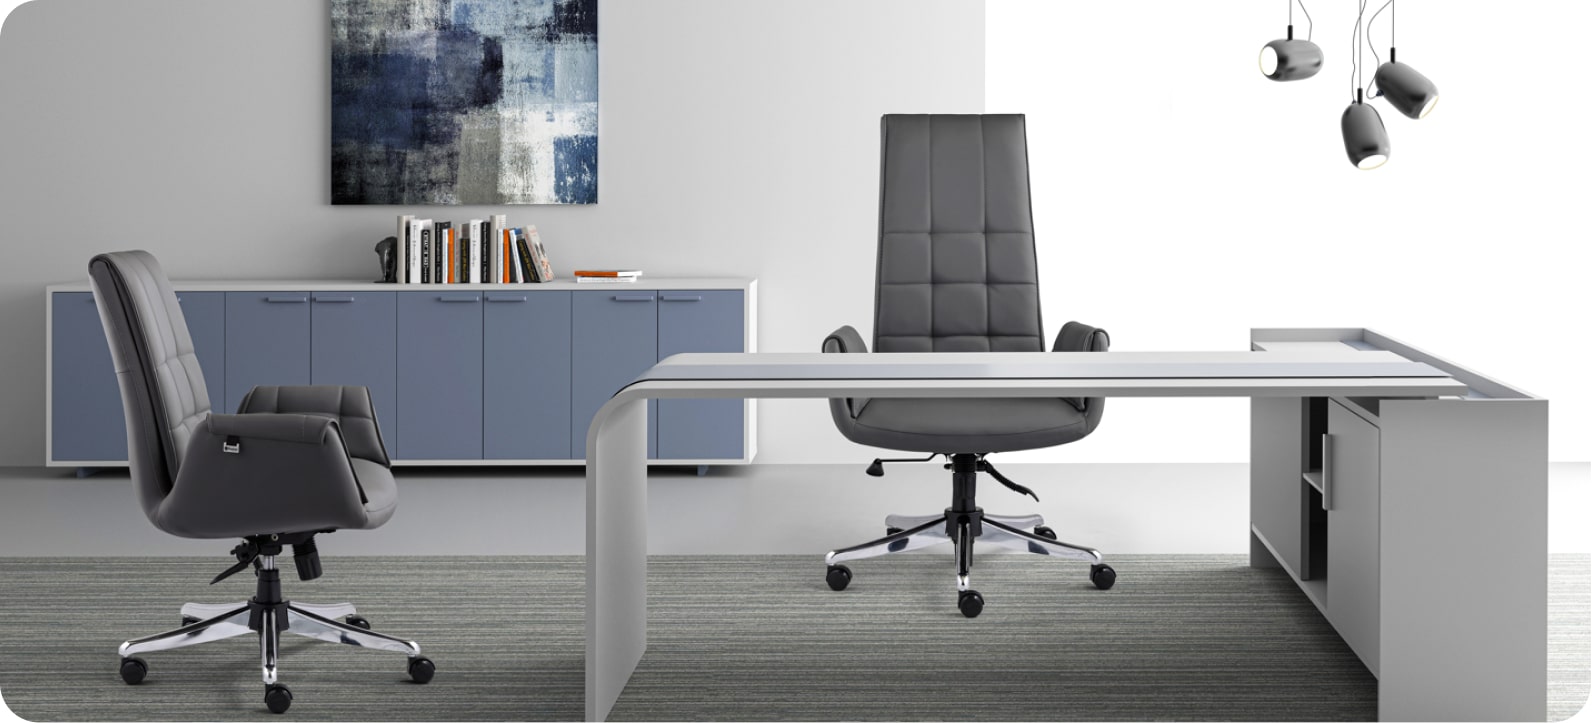 Office Furniture 1401-9-25-Cus 01-min